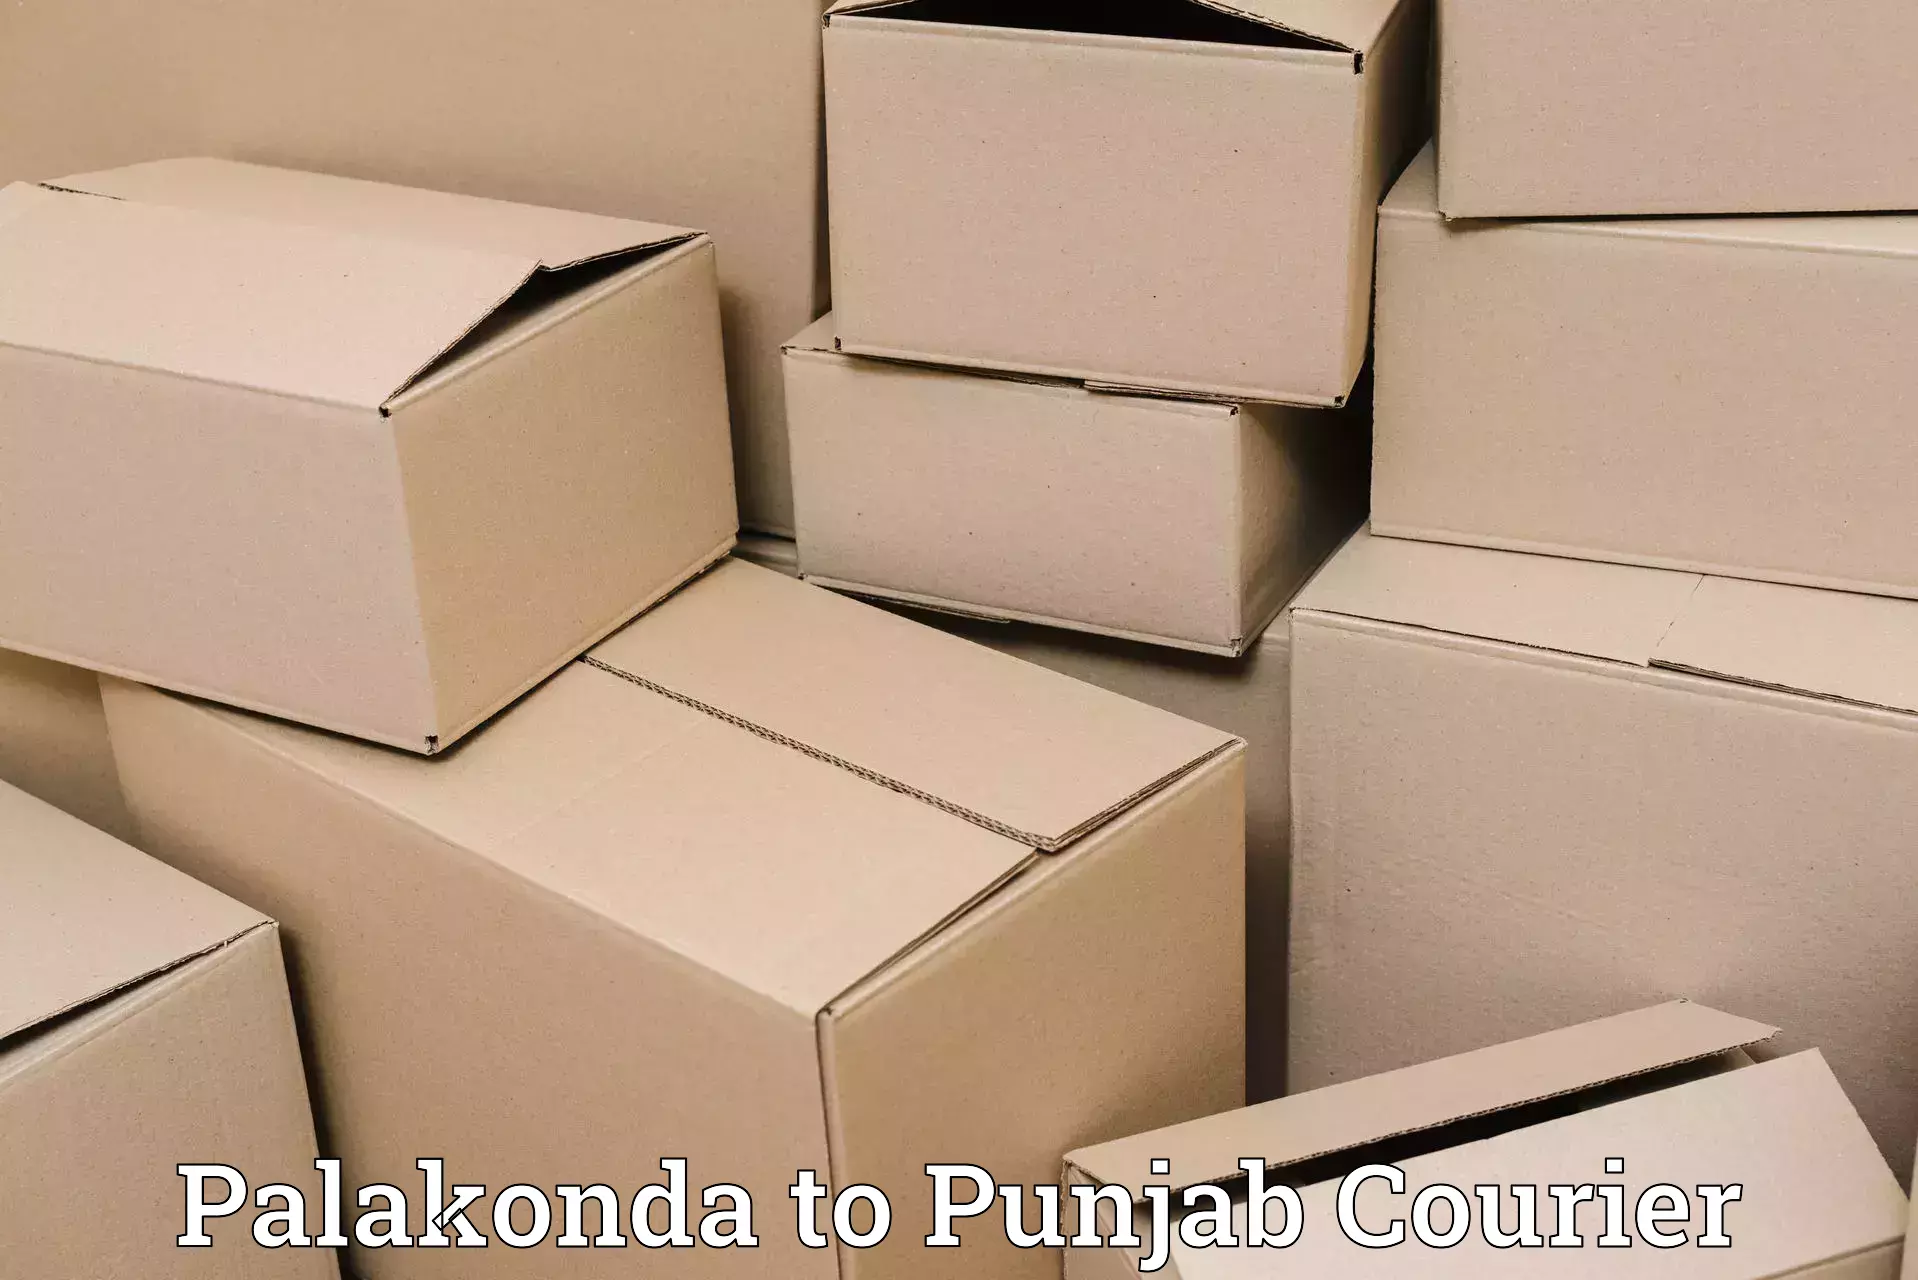 Global logistics network Palakonda to Kapurthala